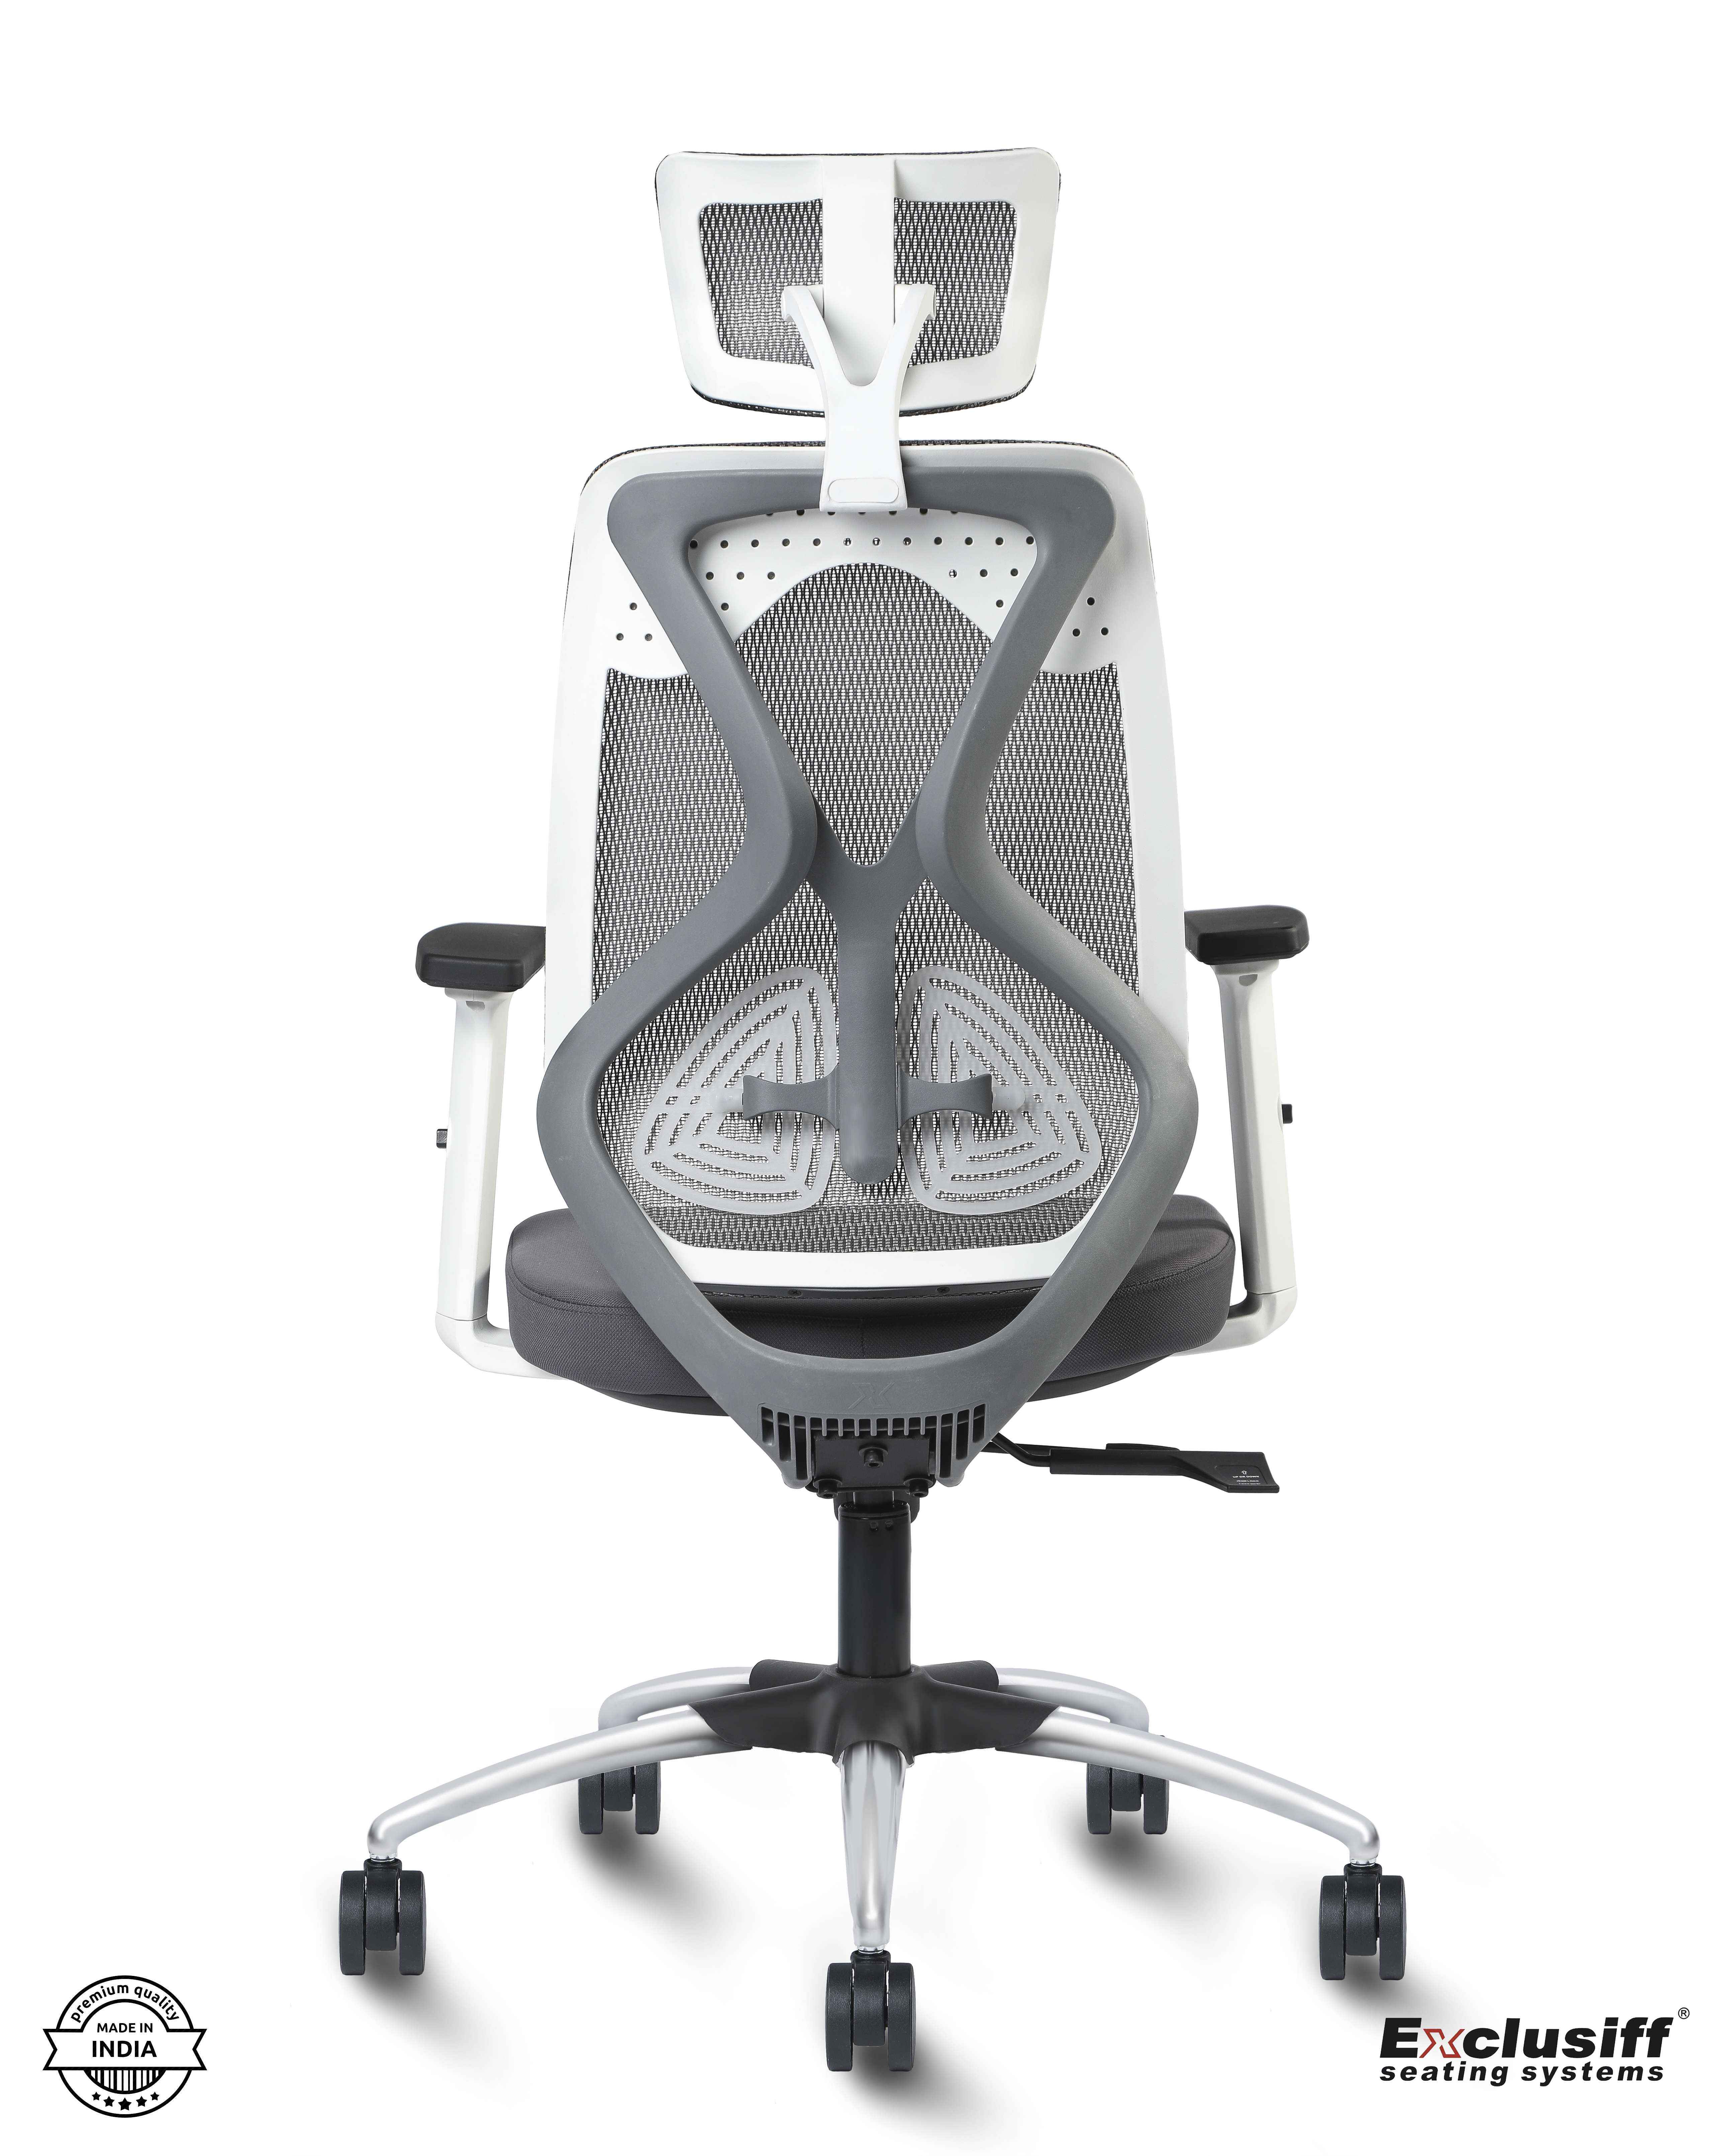 Exclusiff ® Zen Black High Back Ergonomic Office Chair